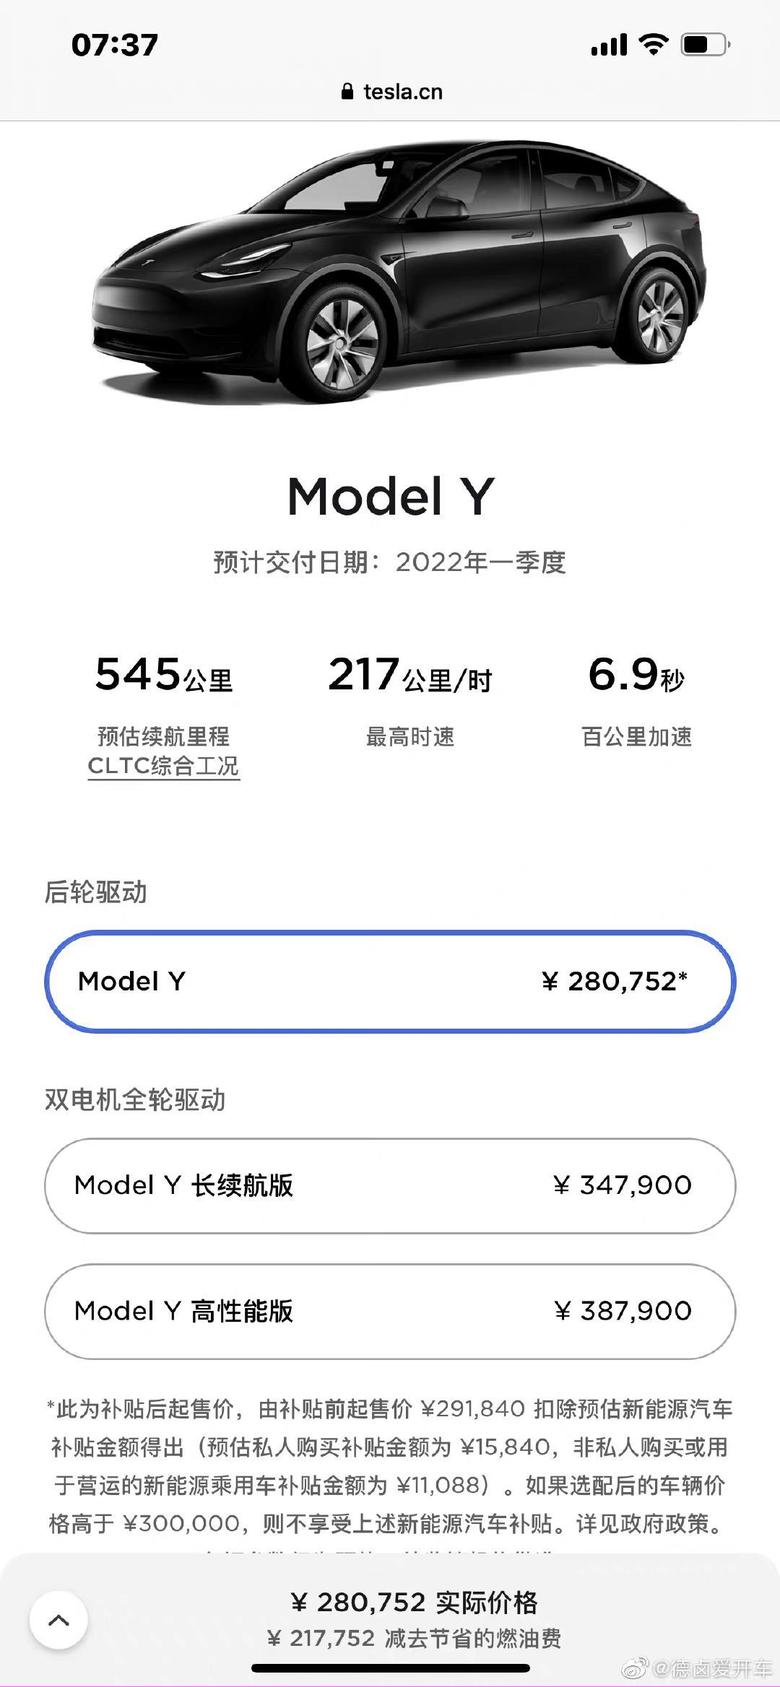 model y 特斯拉Model3/Y入门款后驱版均涨价4752元；-Model3由250,900元上涨至255,652元；-ModelY由276,000元上涨至280,752元；今年产能也已经售罄，交付时间已排到明年一季度。